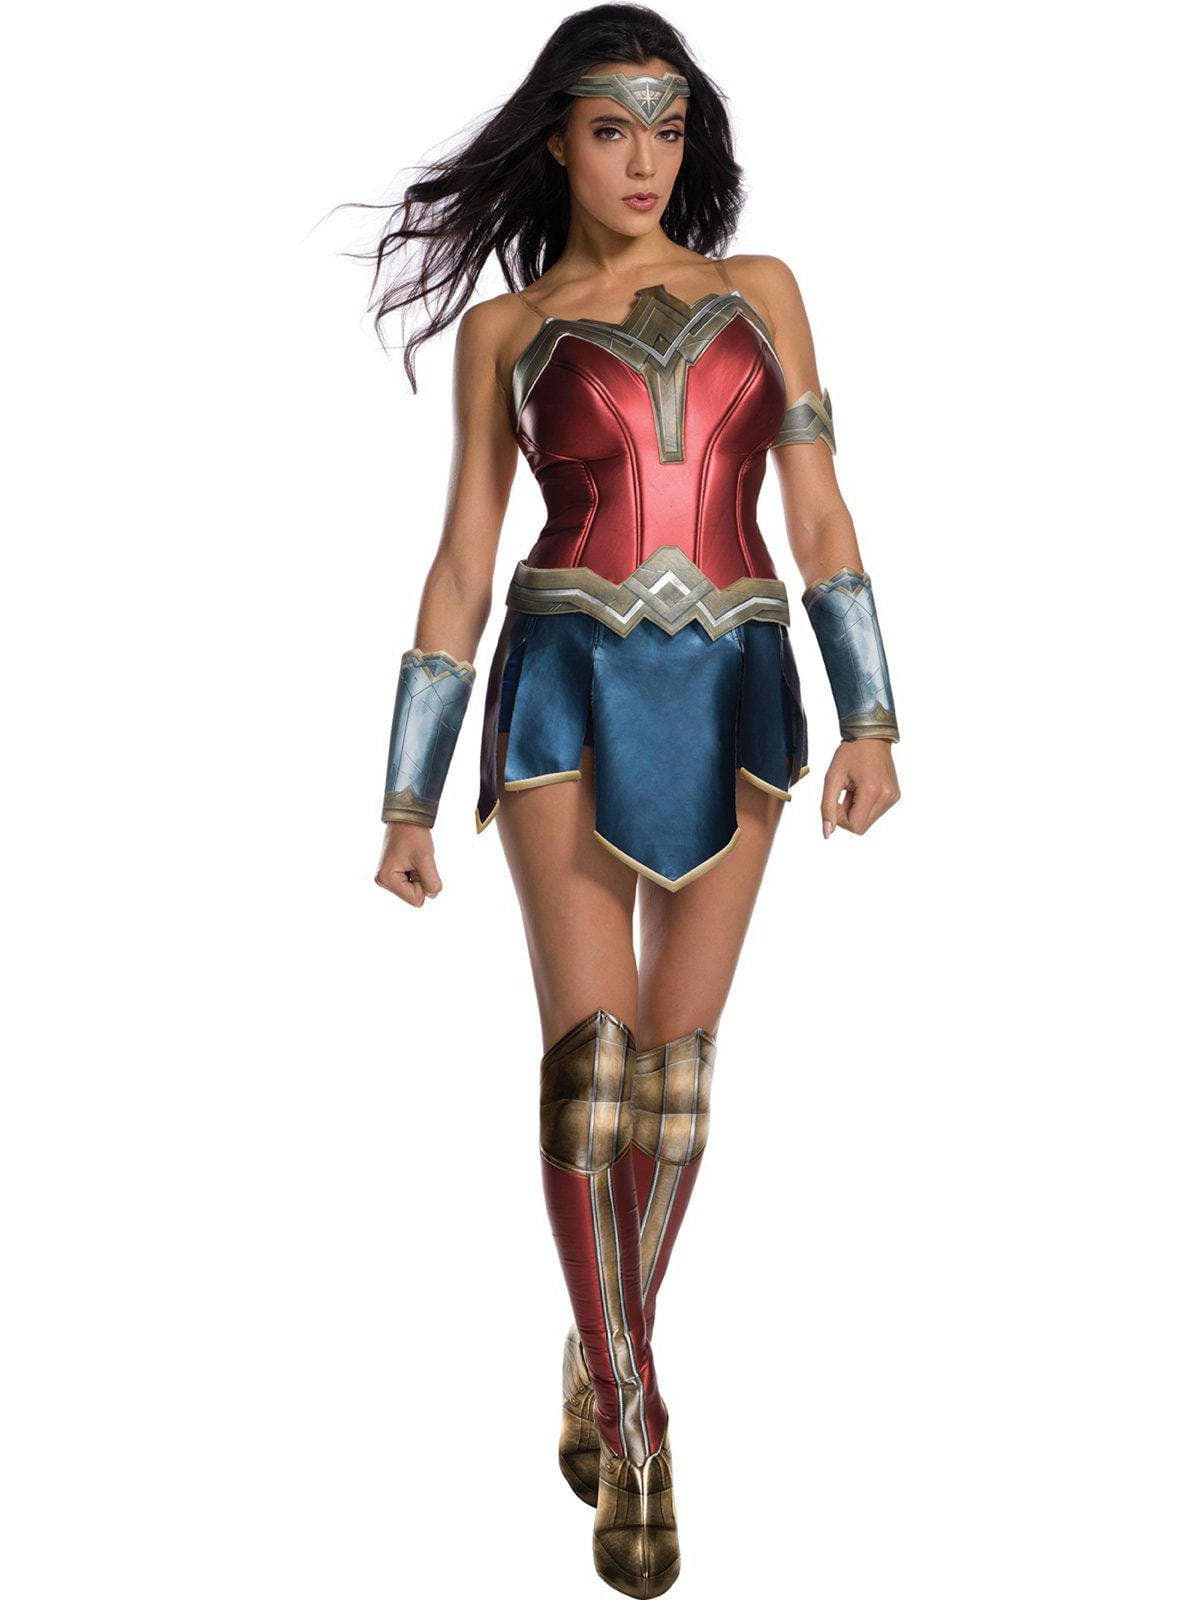 Women's Justice League Wonder Woman Costume - costumes.com